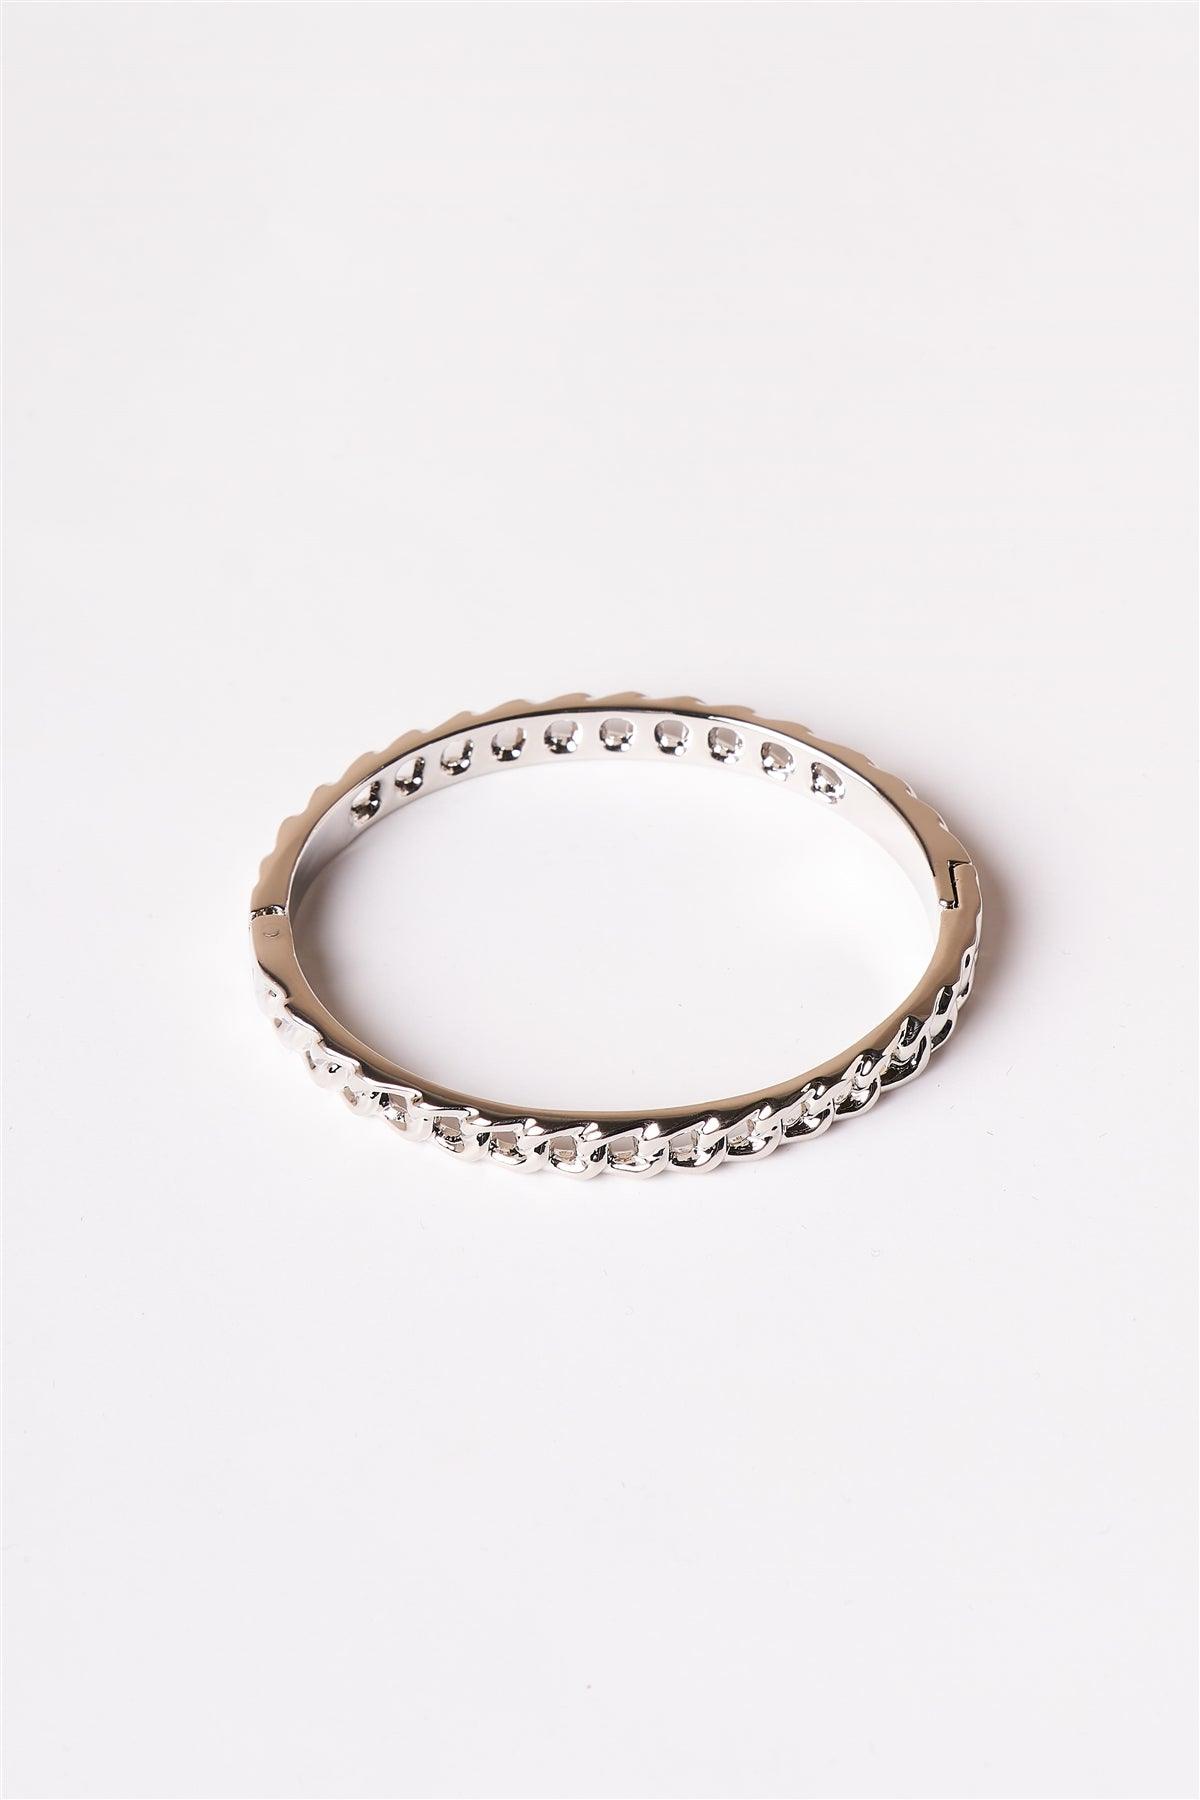 Silver Solid Chain Link Bangle Bracelet /1 Piece